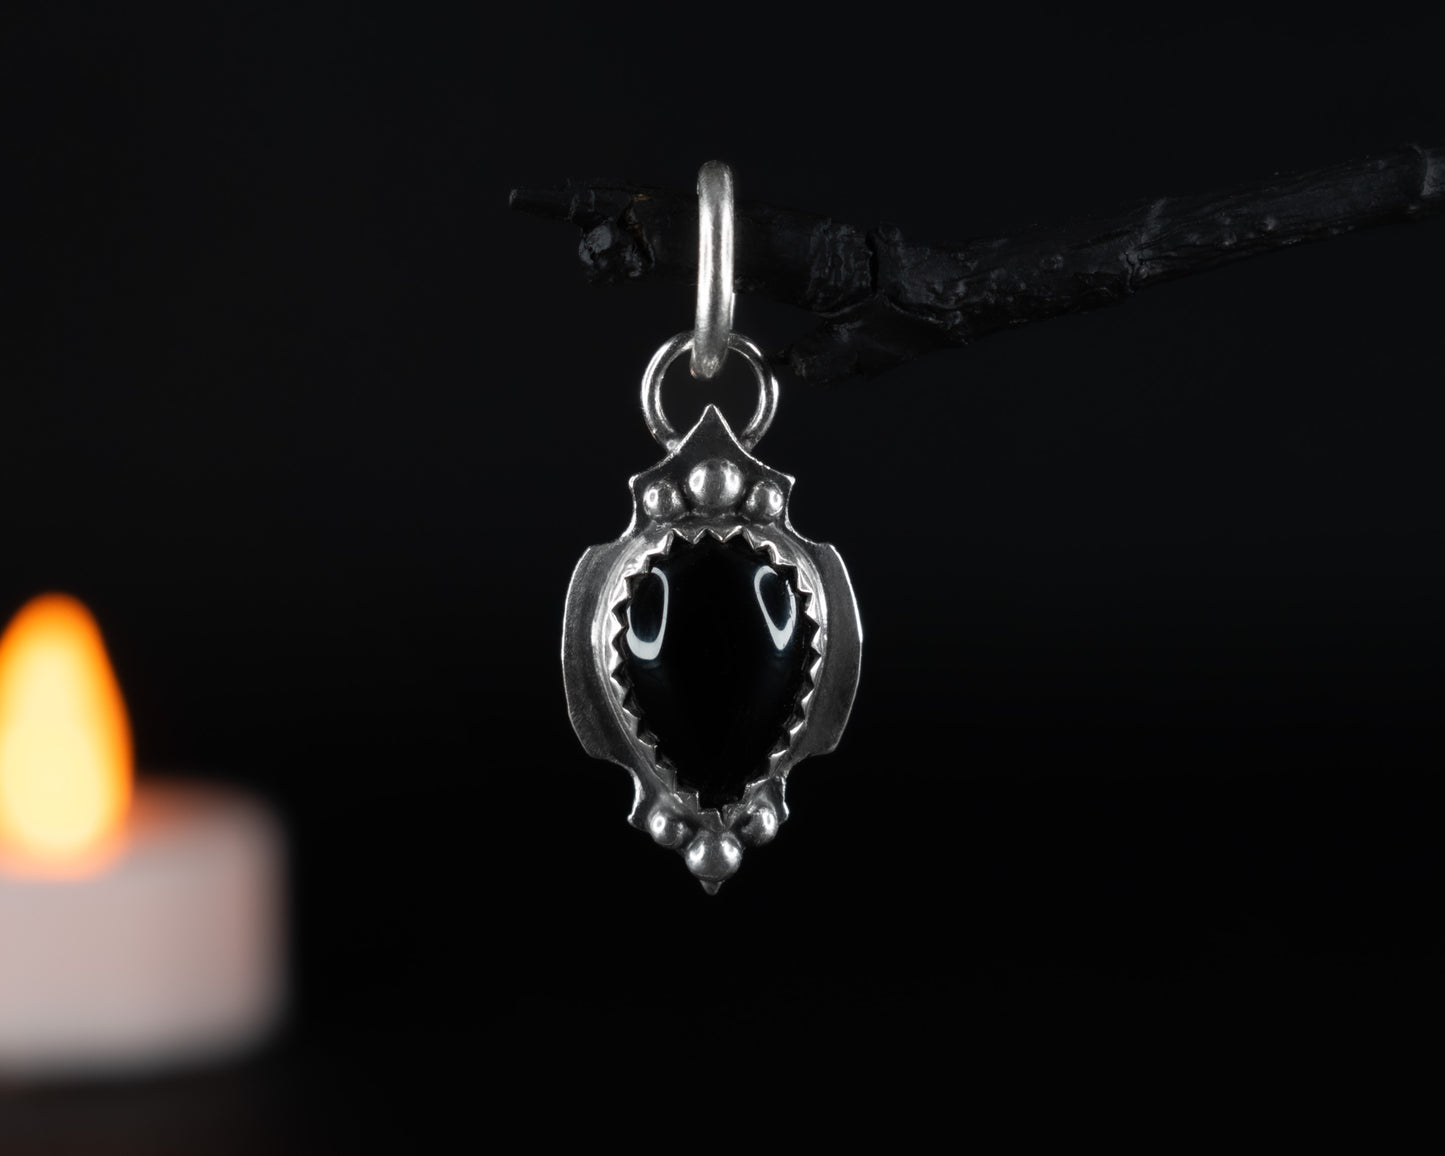 EKRJ652 Gothic Silver and Black Onyx Charm for Pendants or Bracelets